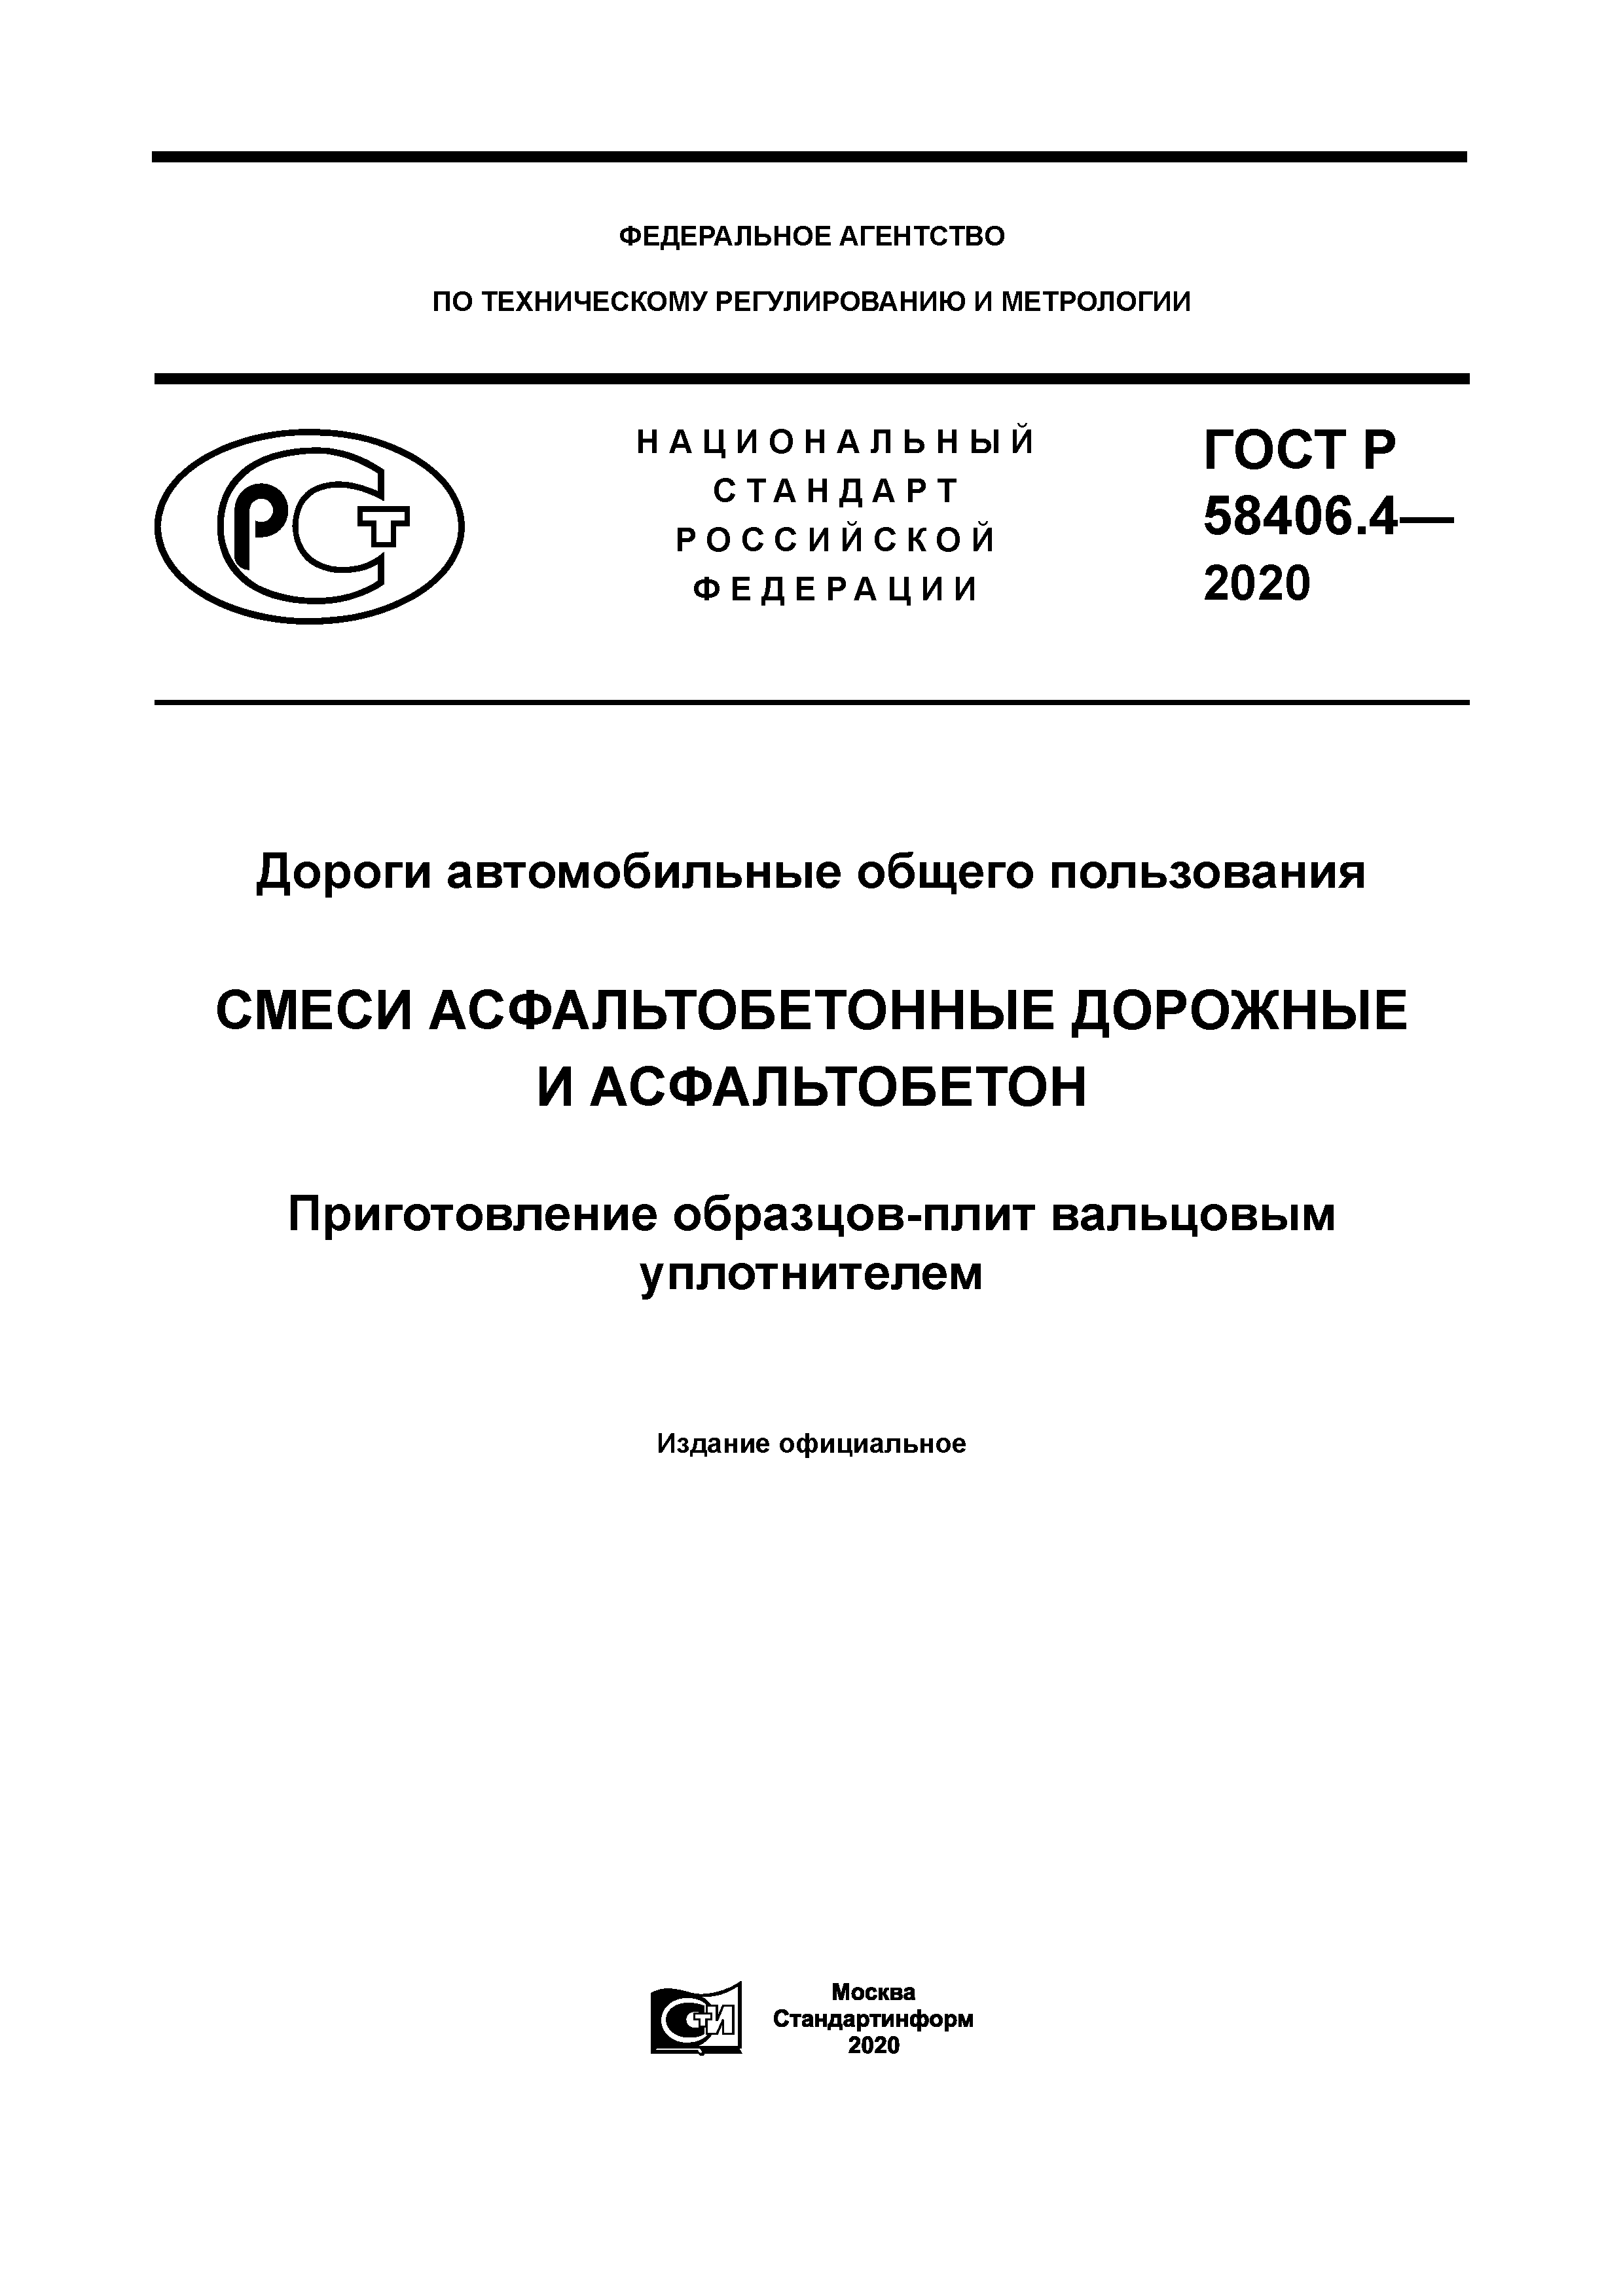 ГОСТ Р 58406.4-2020